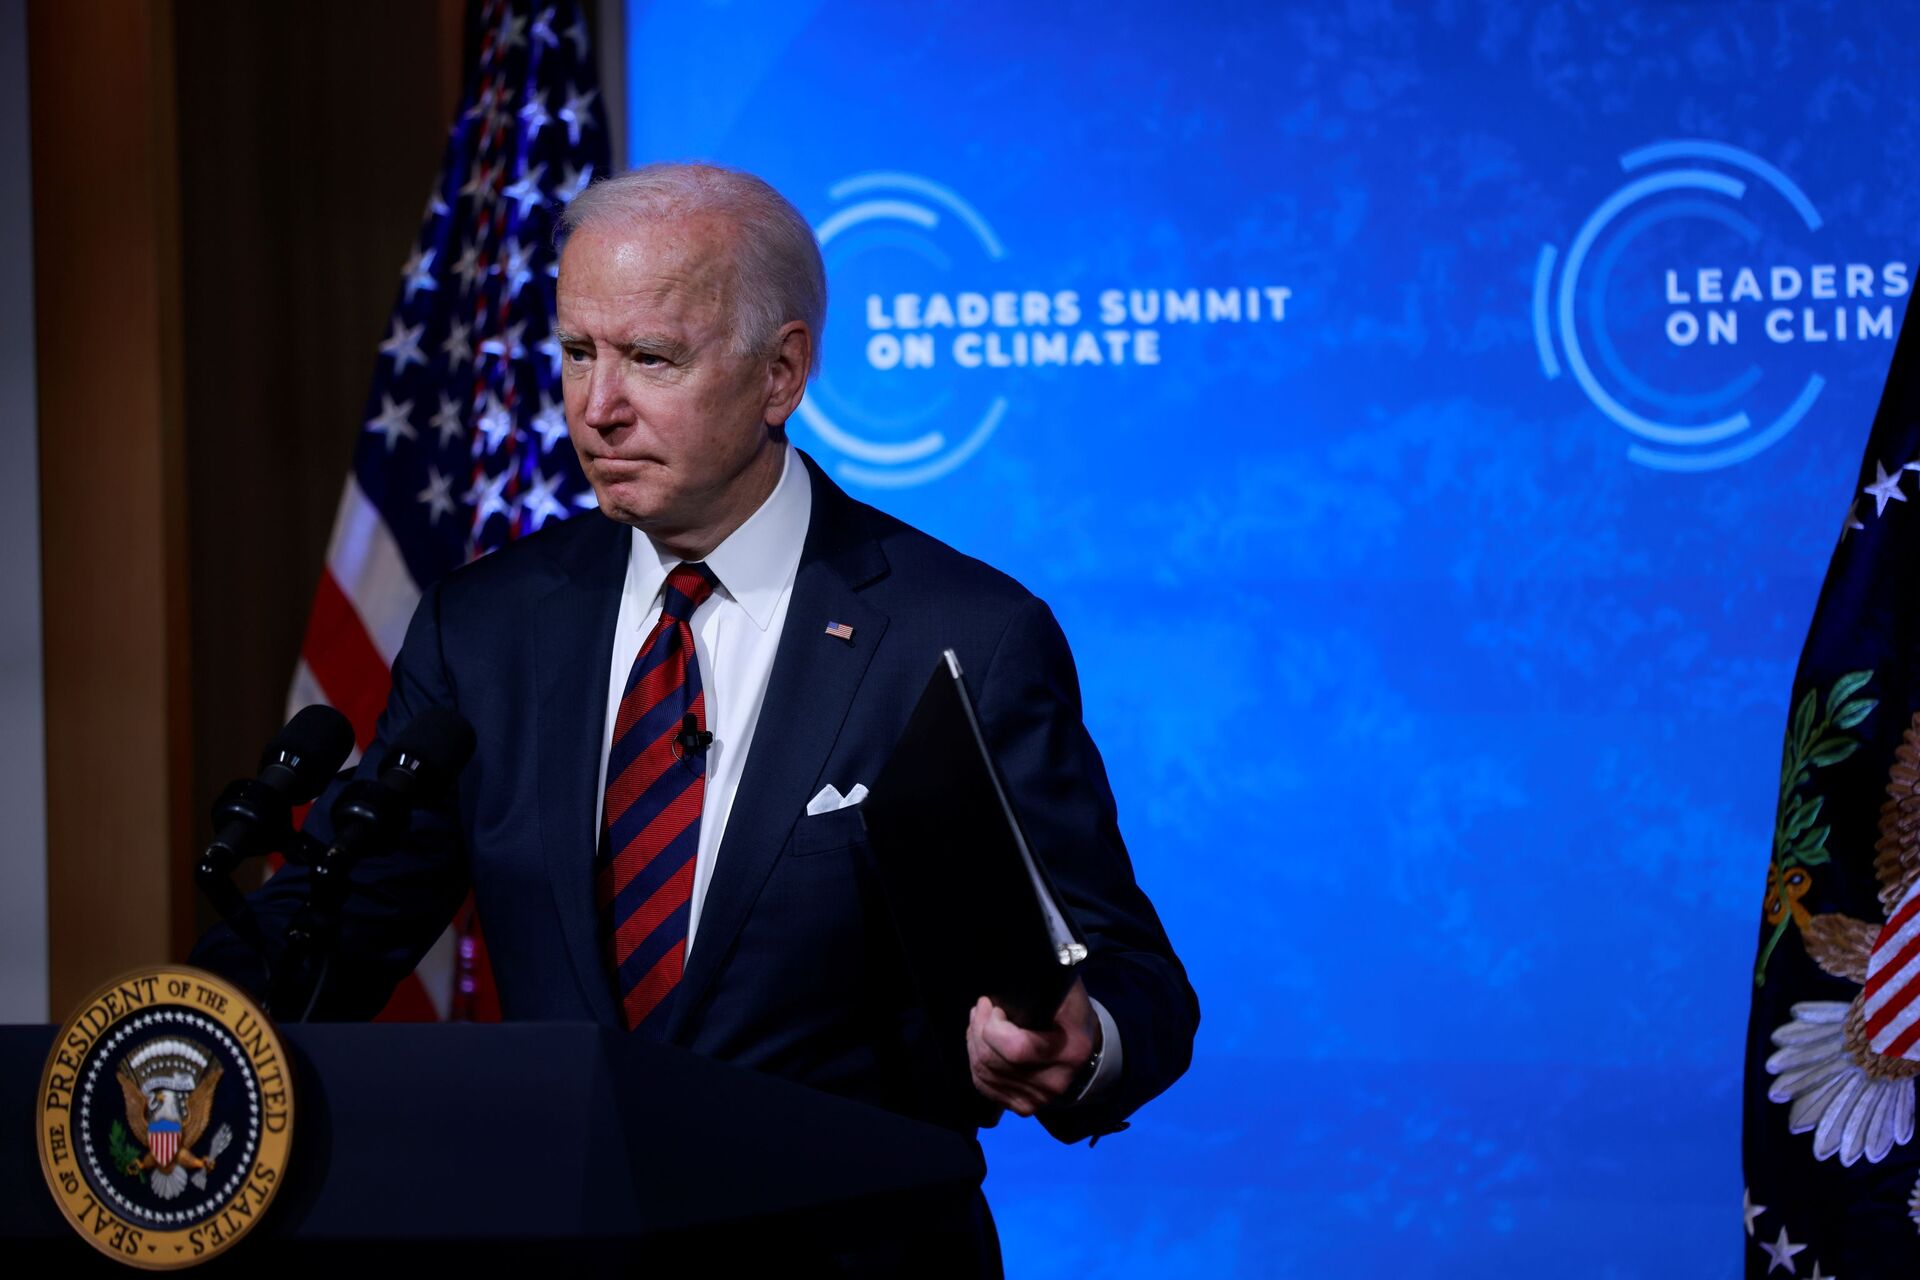 Biden Says ‘Heartened’ By Putin’s Call During Climate Summit - Sputnik International, 1920, 23.04.2021